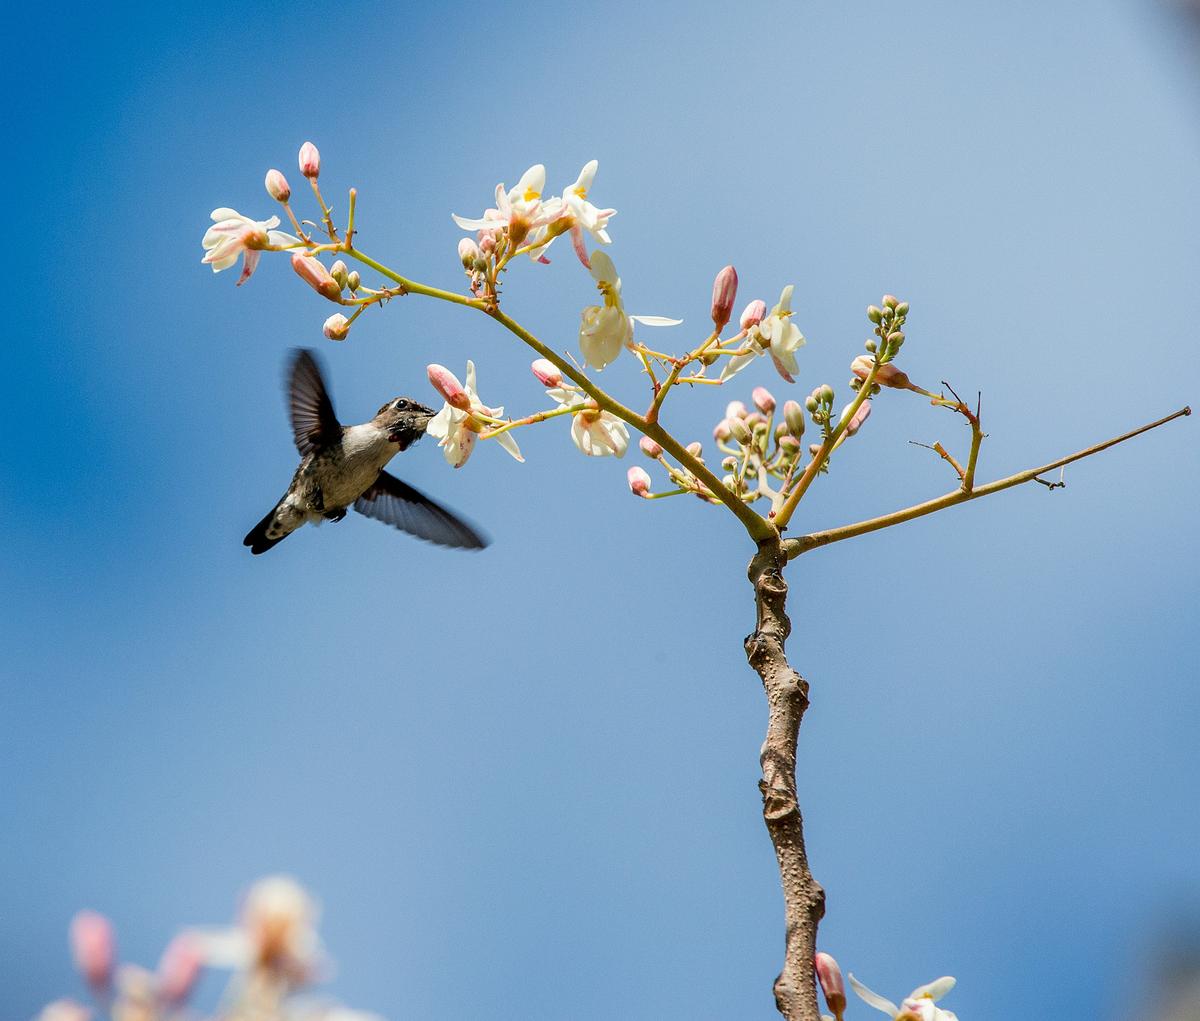 A male Cuban bee hummingbird feeds from a flowering branch. (Sergey Uryadnikov/Shutterstock)